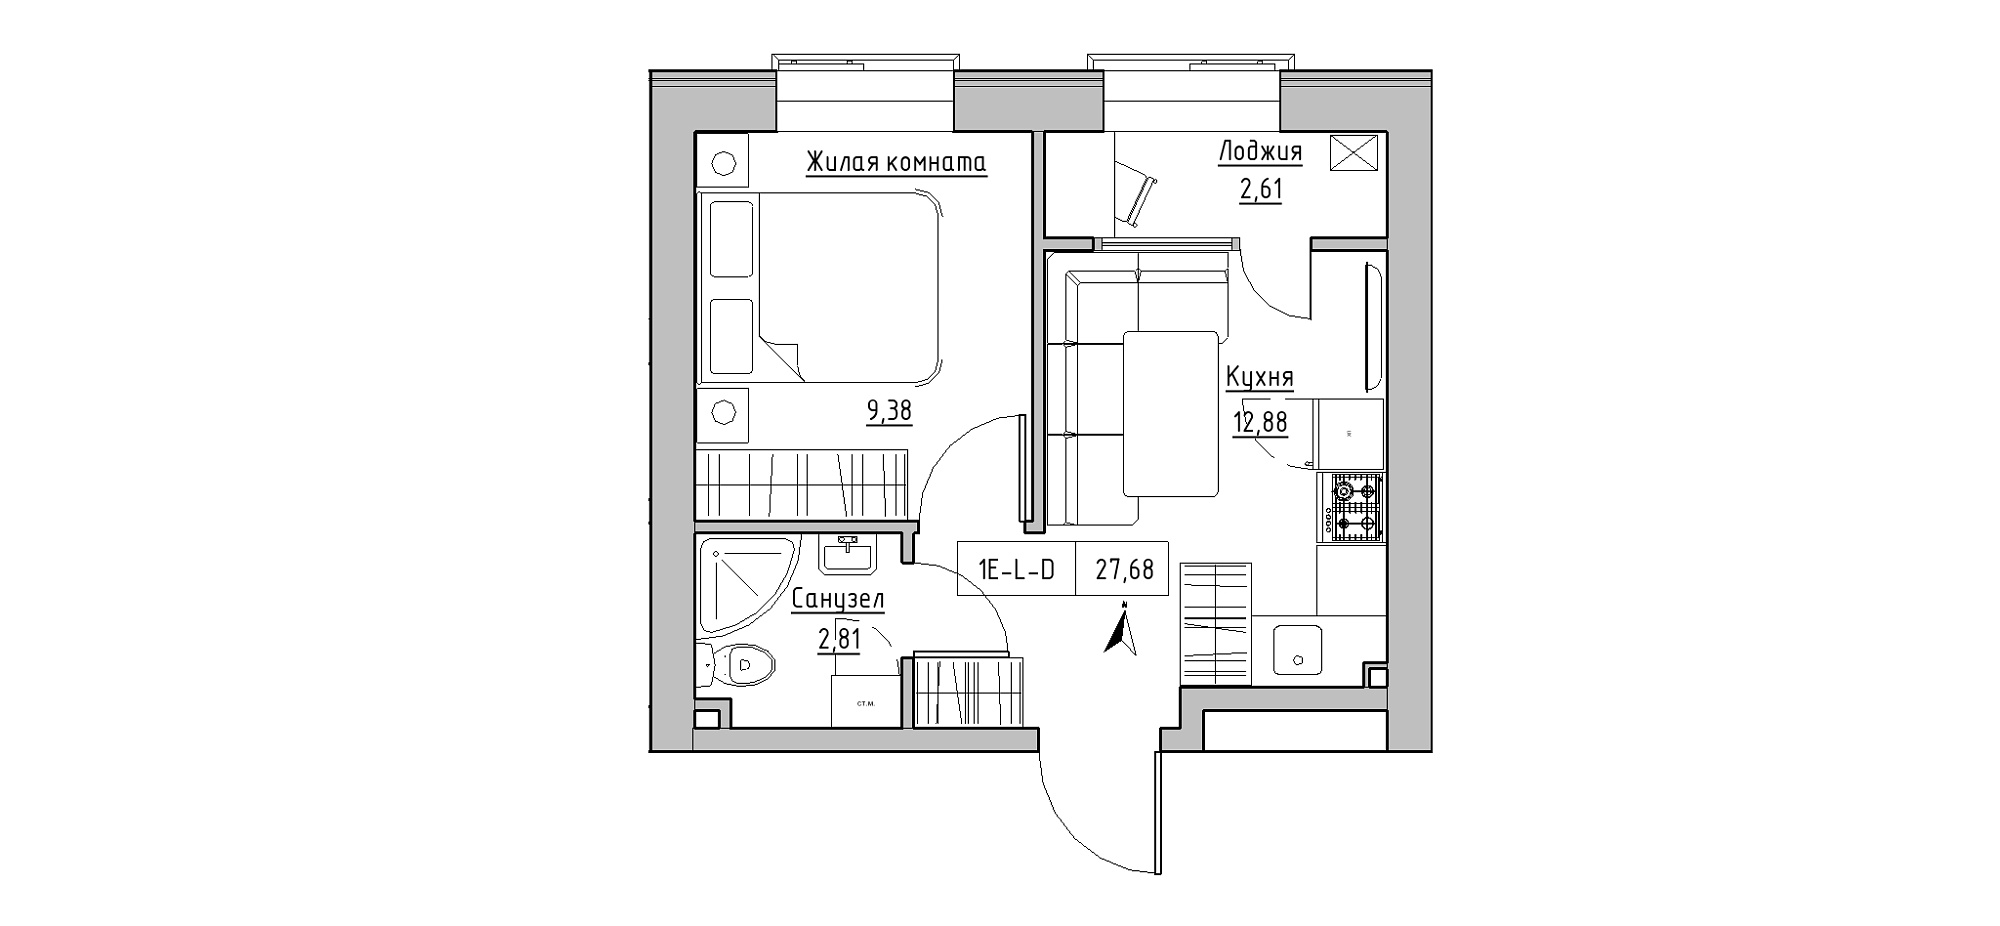 Planning 1-rm flats area 27.68m2, KS-020-05/0001.